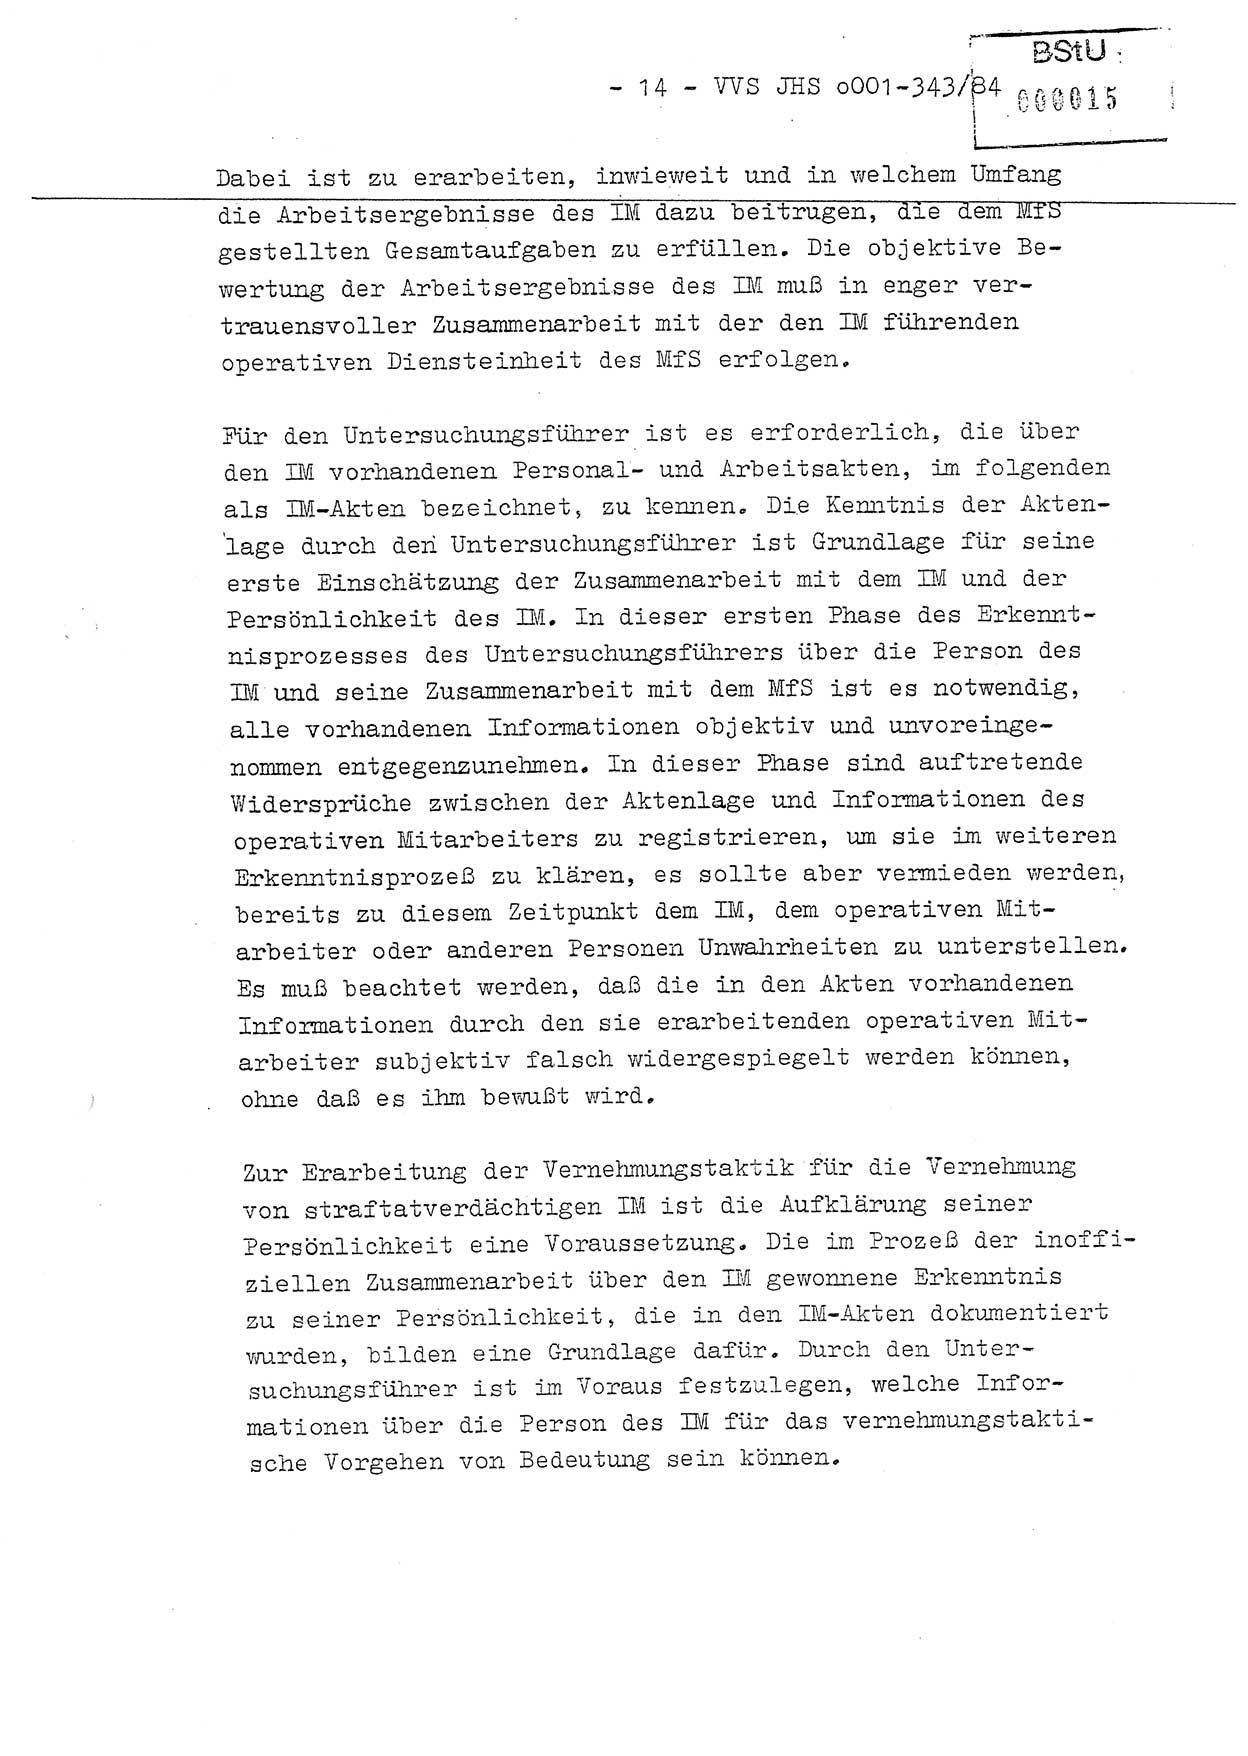 Diplomarbeit, Oberleutnant Bernd Michael (HA Ⅸ/5), Oberleutnant Peter Felber (HA IX/5), Ministerium für Staatssicherheit (MfS) [Deutsche Demokratische Republik (DDR)], Juristische Hochschule (JHS), Vertrauliche Verschlußsache (VVS) o001-343/84, Potsdam 1985, Seite 14 (Dipl.-Arb. MfS DDR JHS VVS o001-343/84 1985, S. 14)